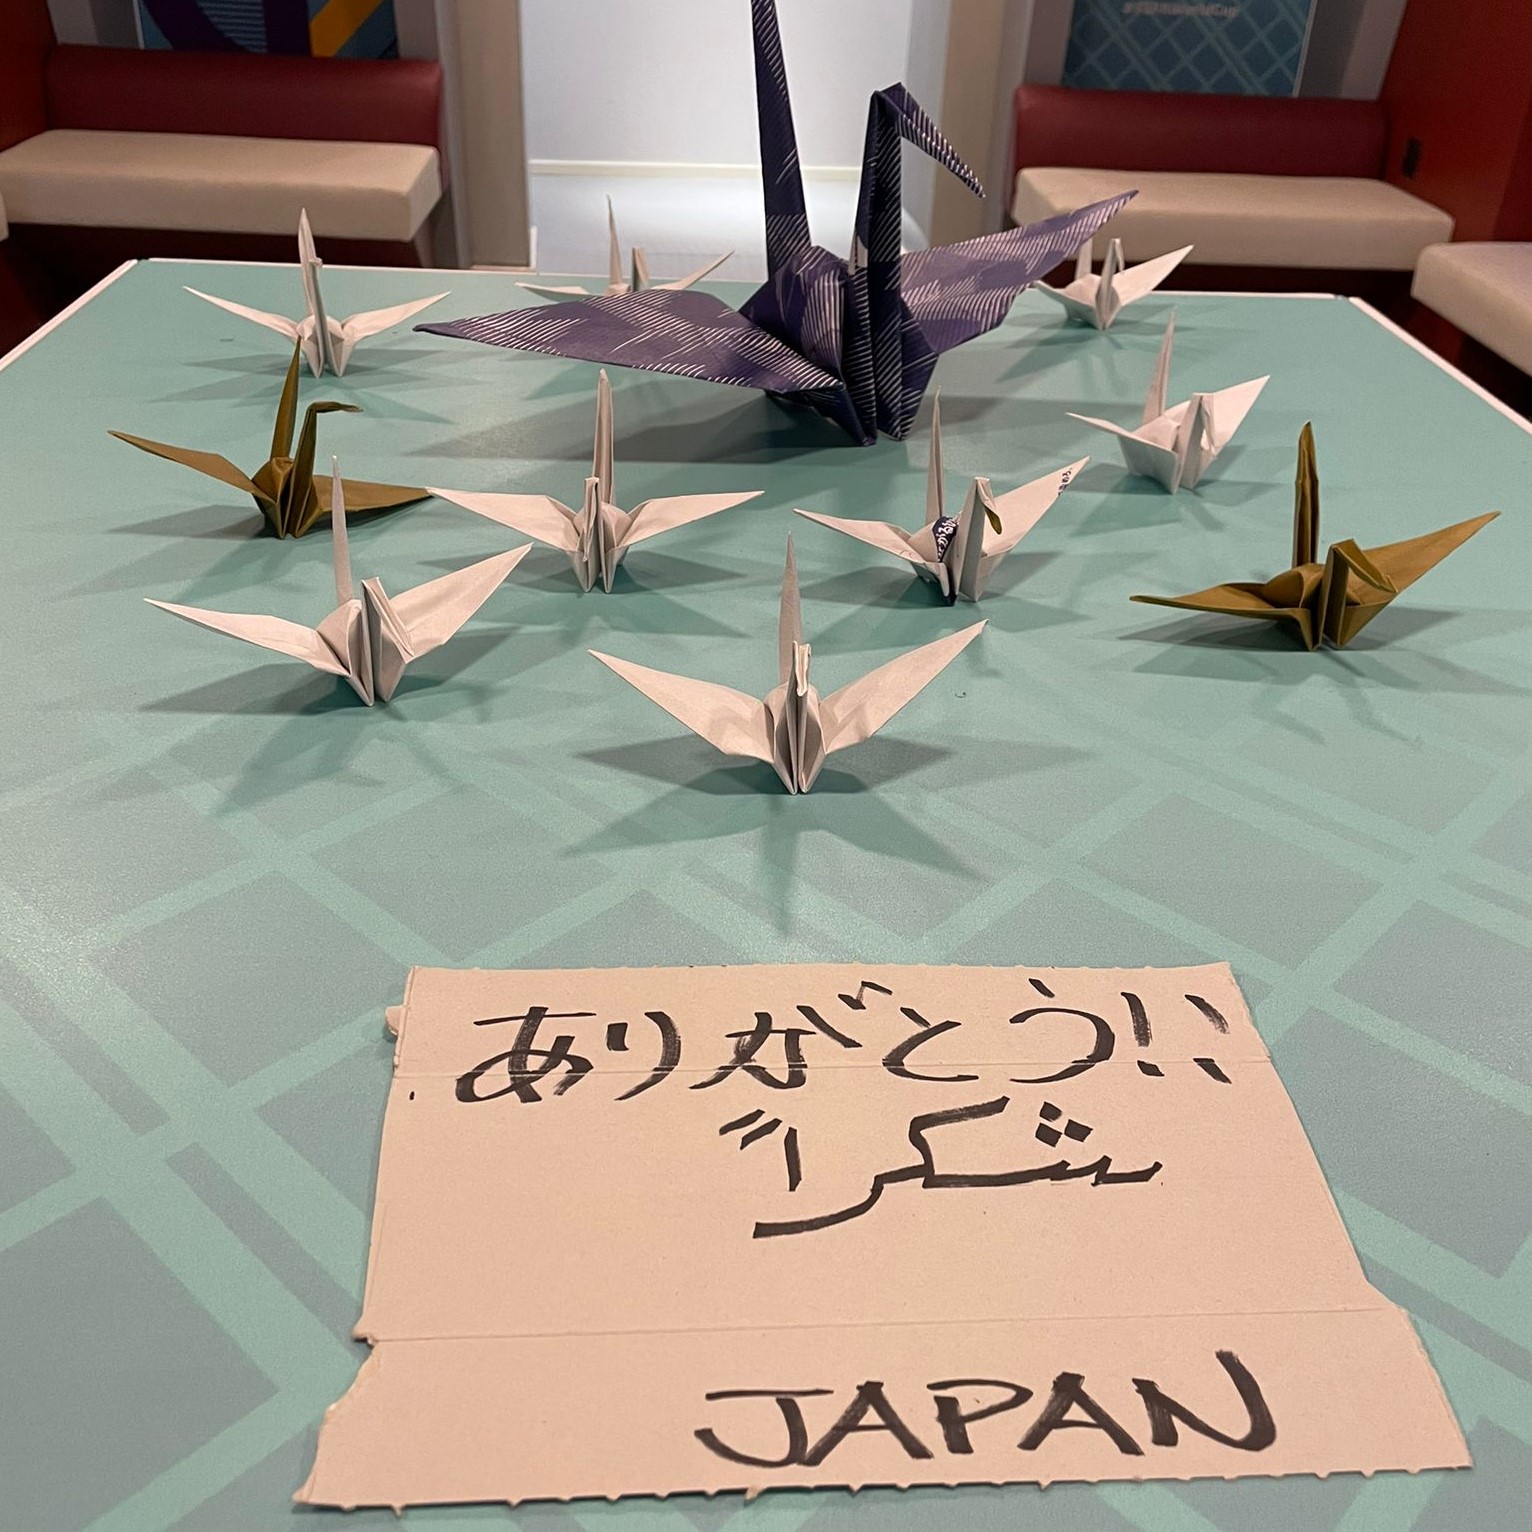 Japan football team - origami cranes